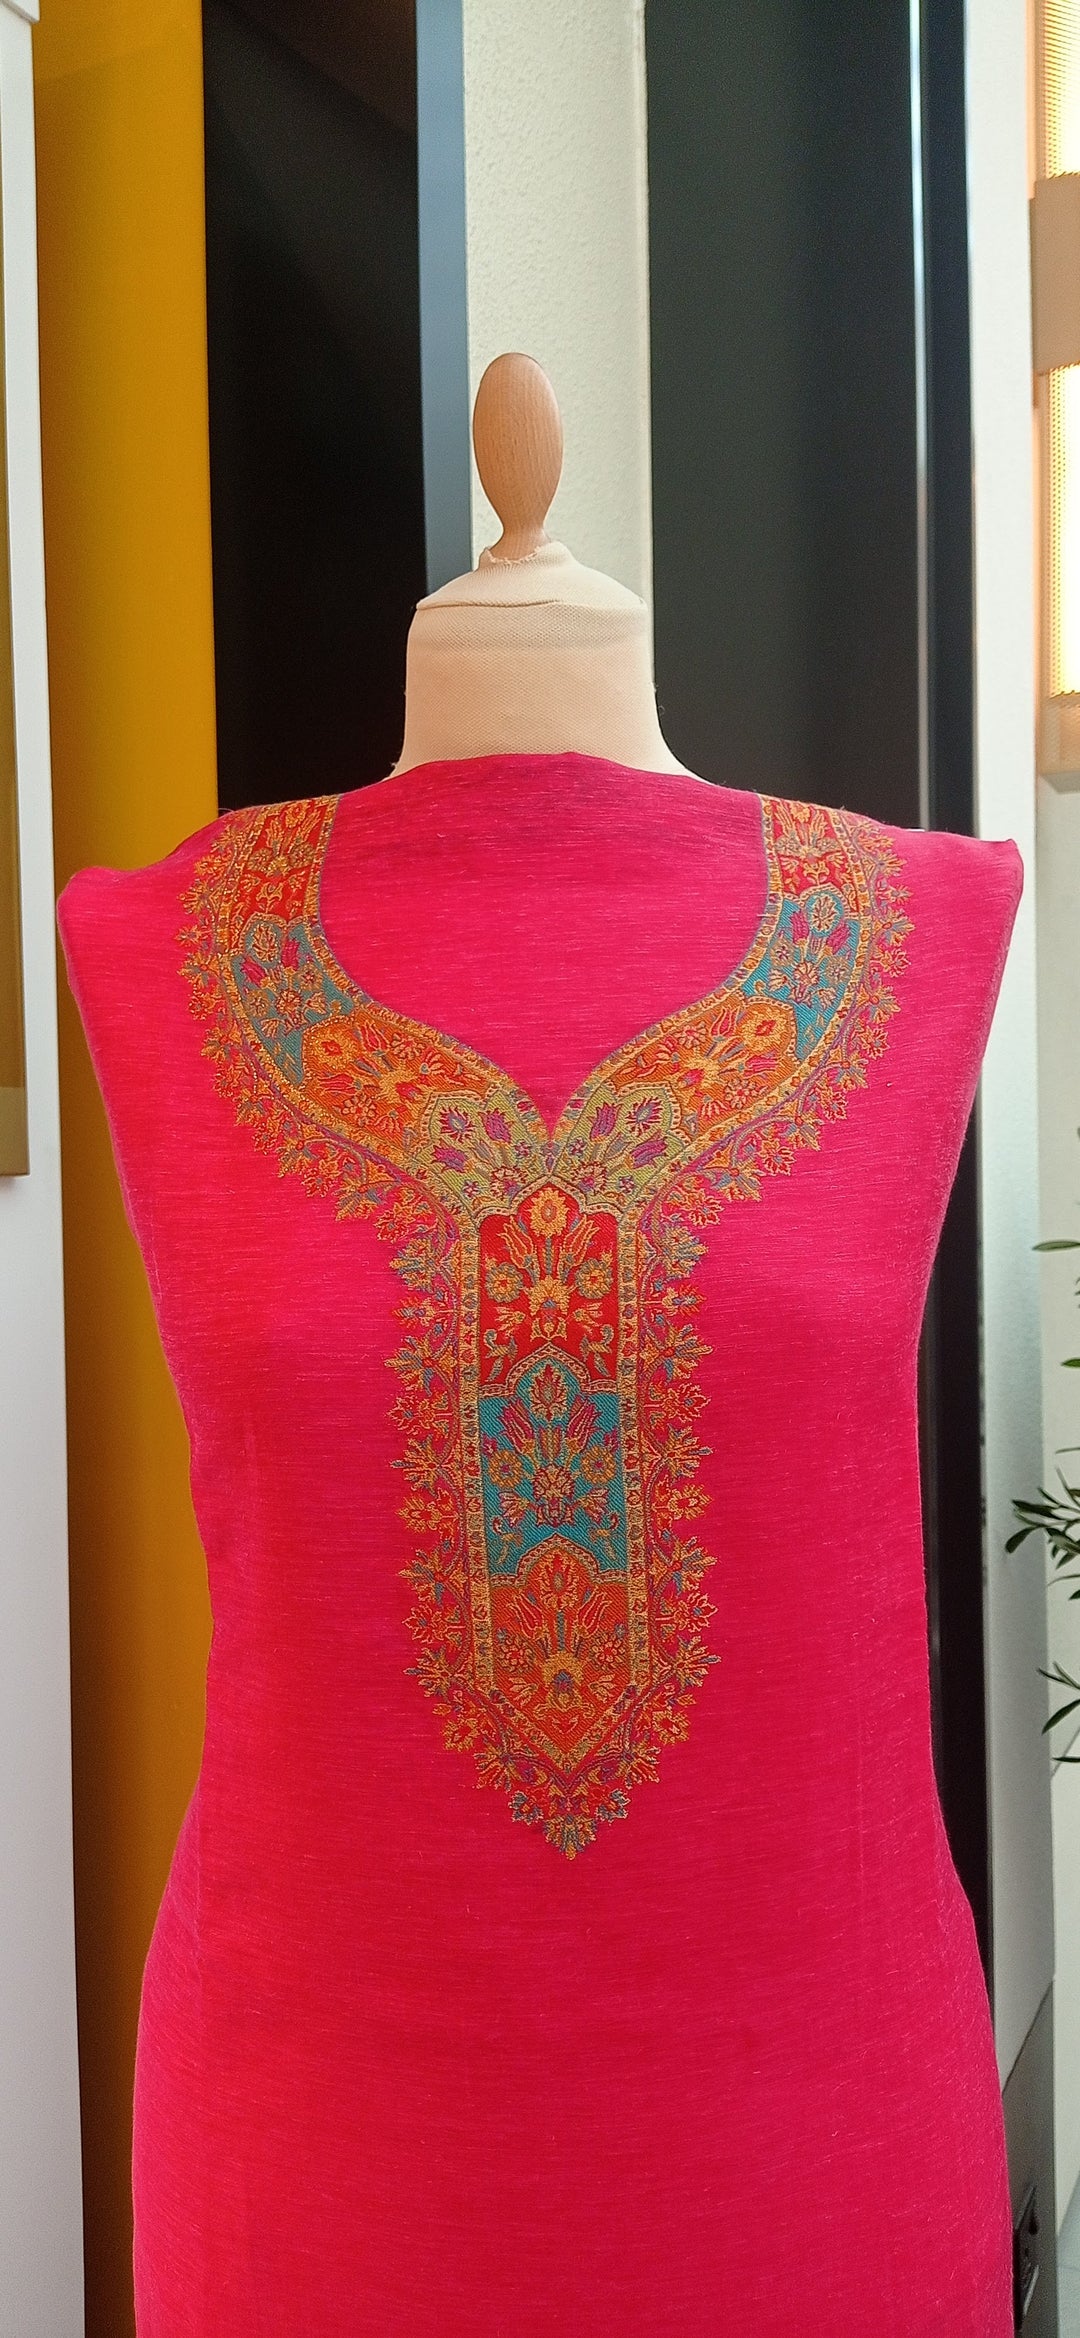 Gitasha Rani Pink Cotton Silk Suit with a Statement Colorful Dupatta (Unstitched)